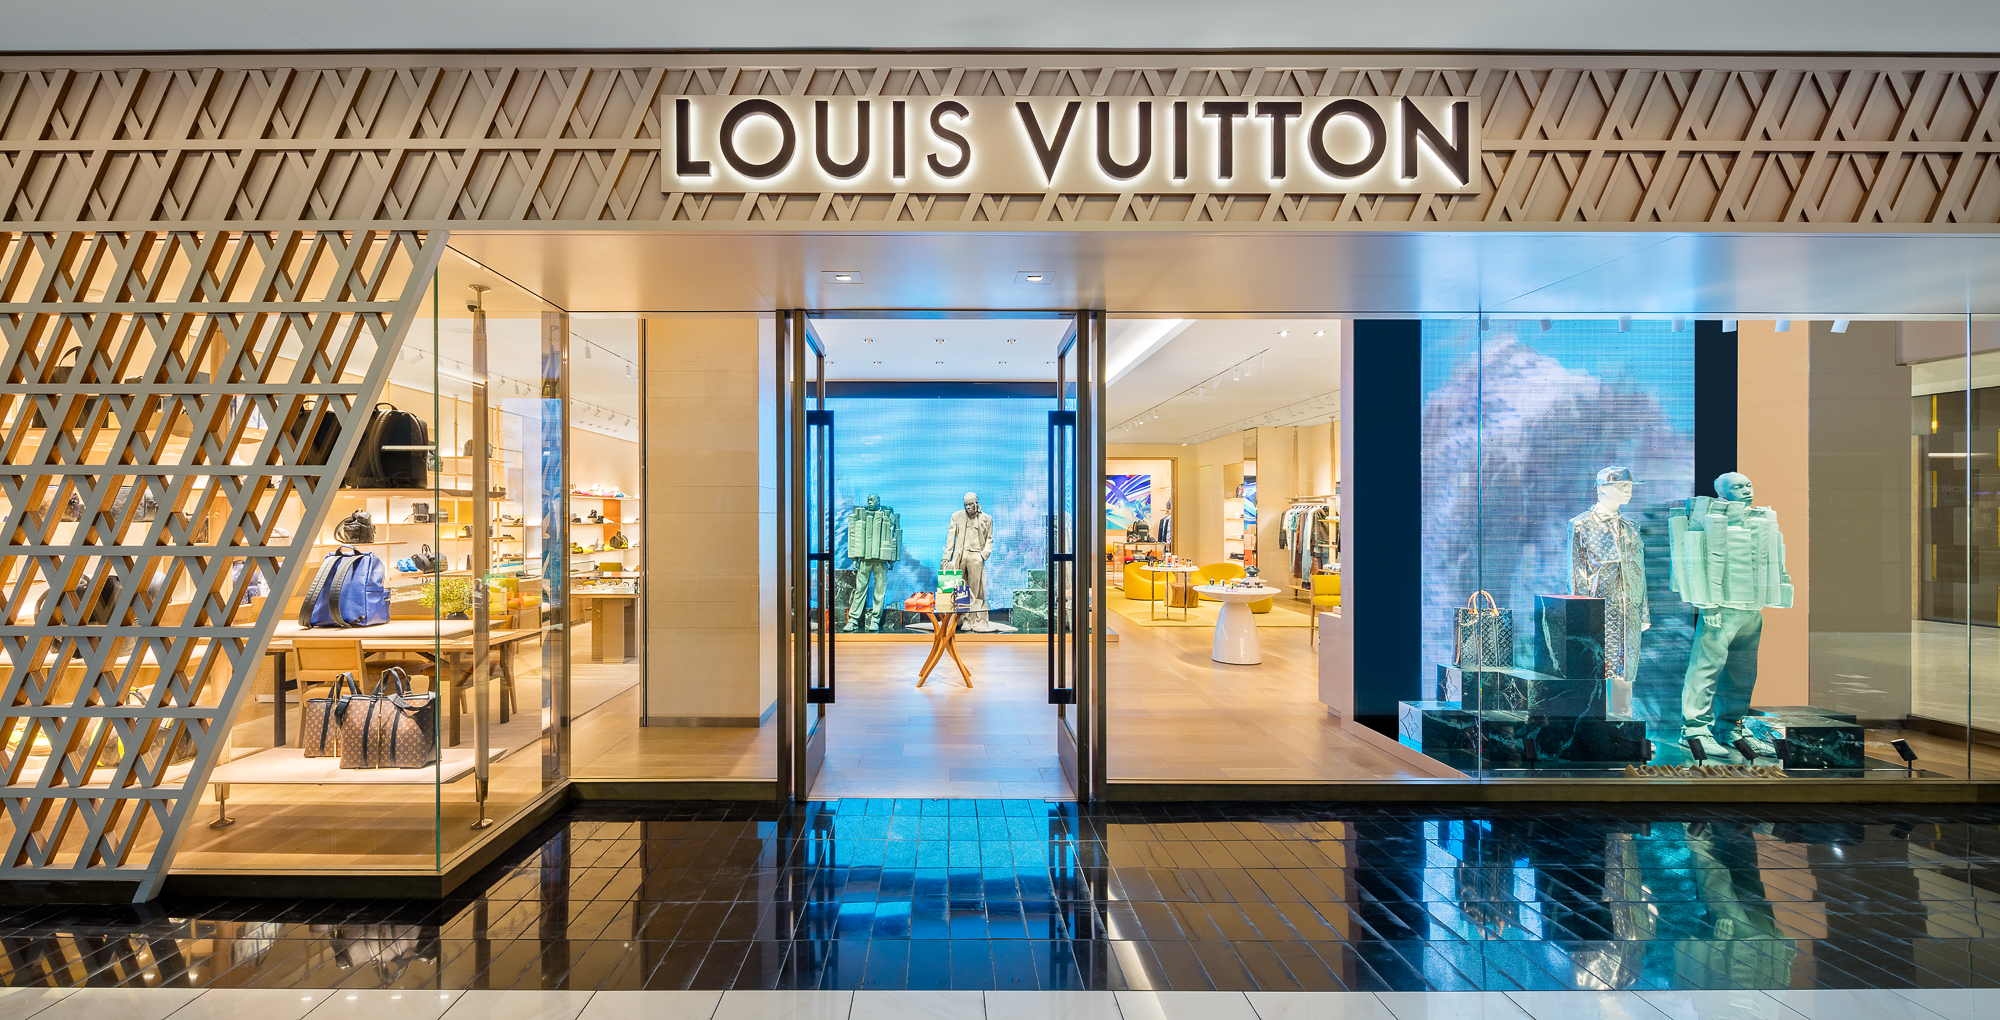 Louis Vuitton Houston Menswear store front